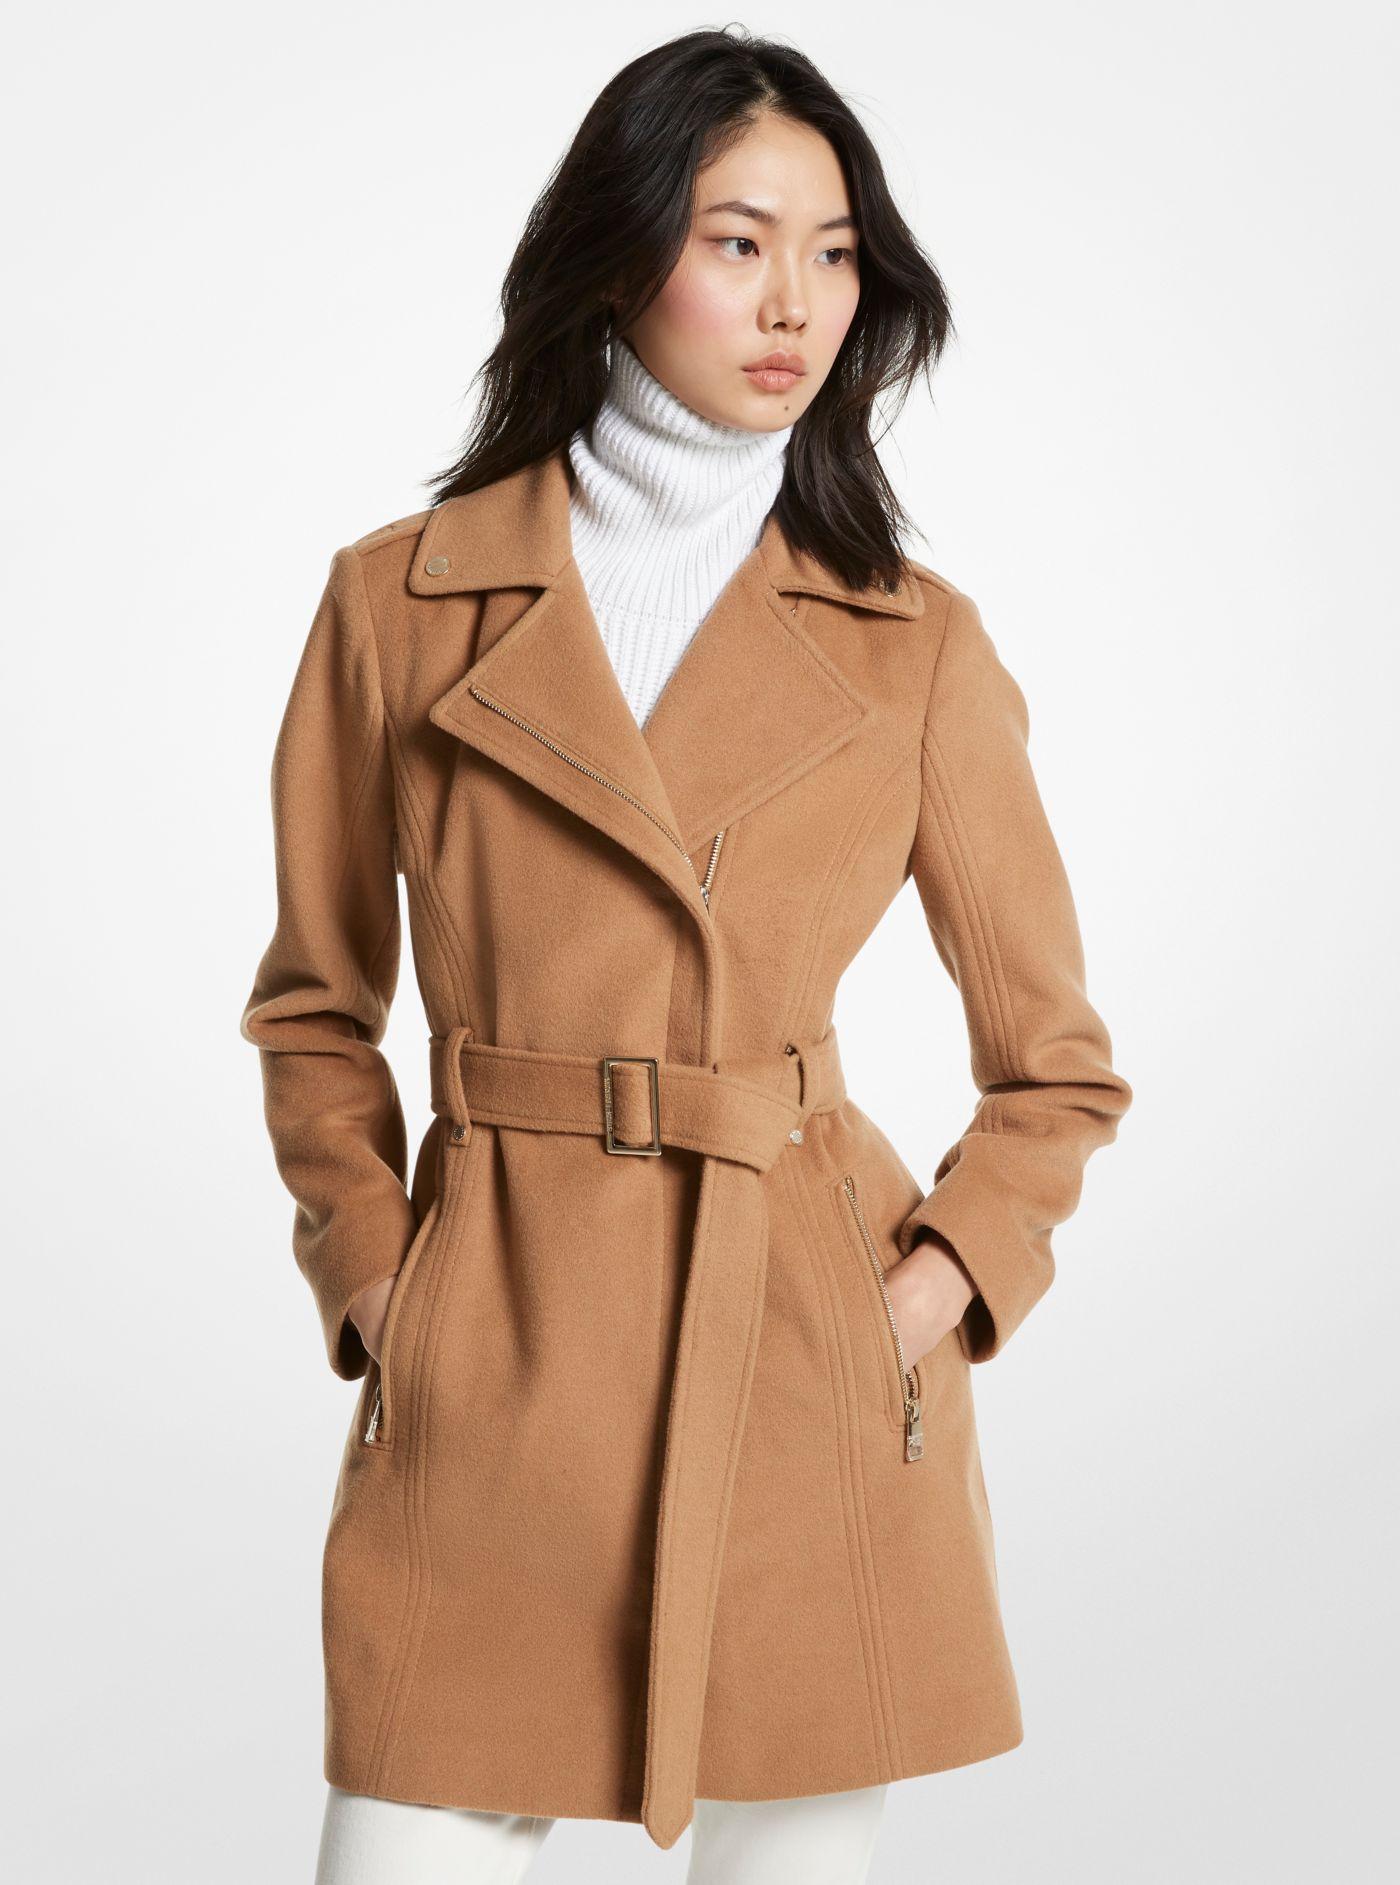 MICHAEL Michael Kors Hooded WoolBlend Coat Only at Macys  Hooded trench  coat Wool blend coat Coats for women